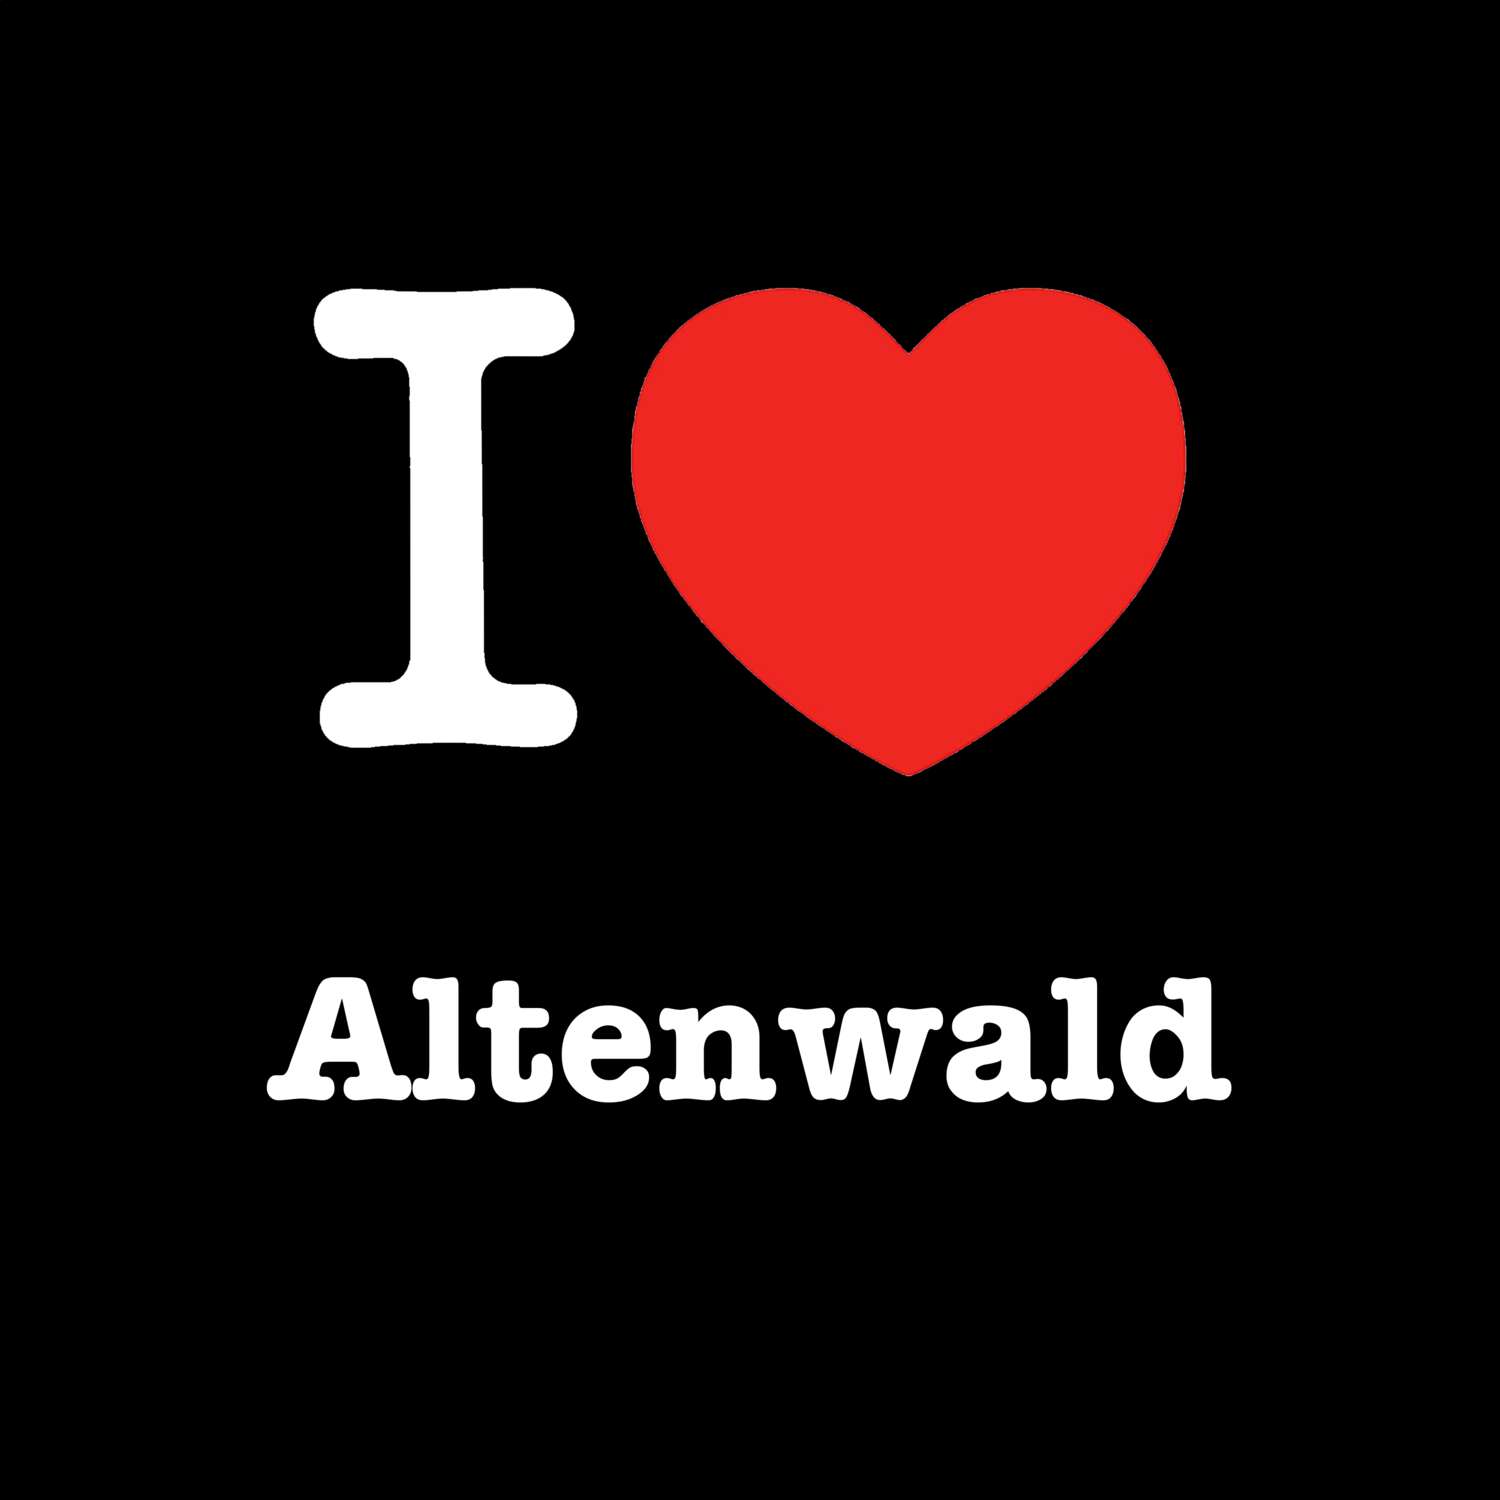 Altenwald T-Shirt »I love«